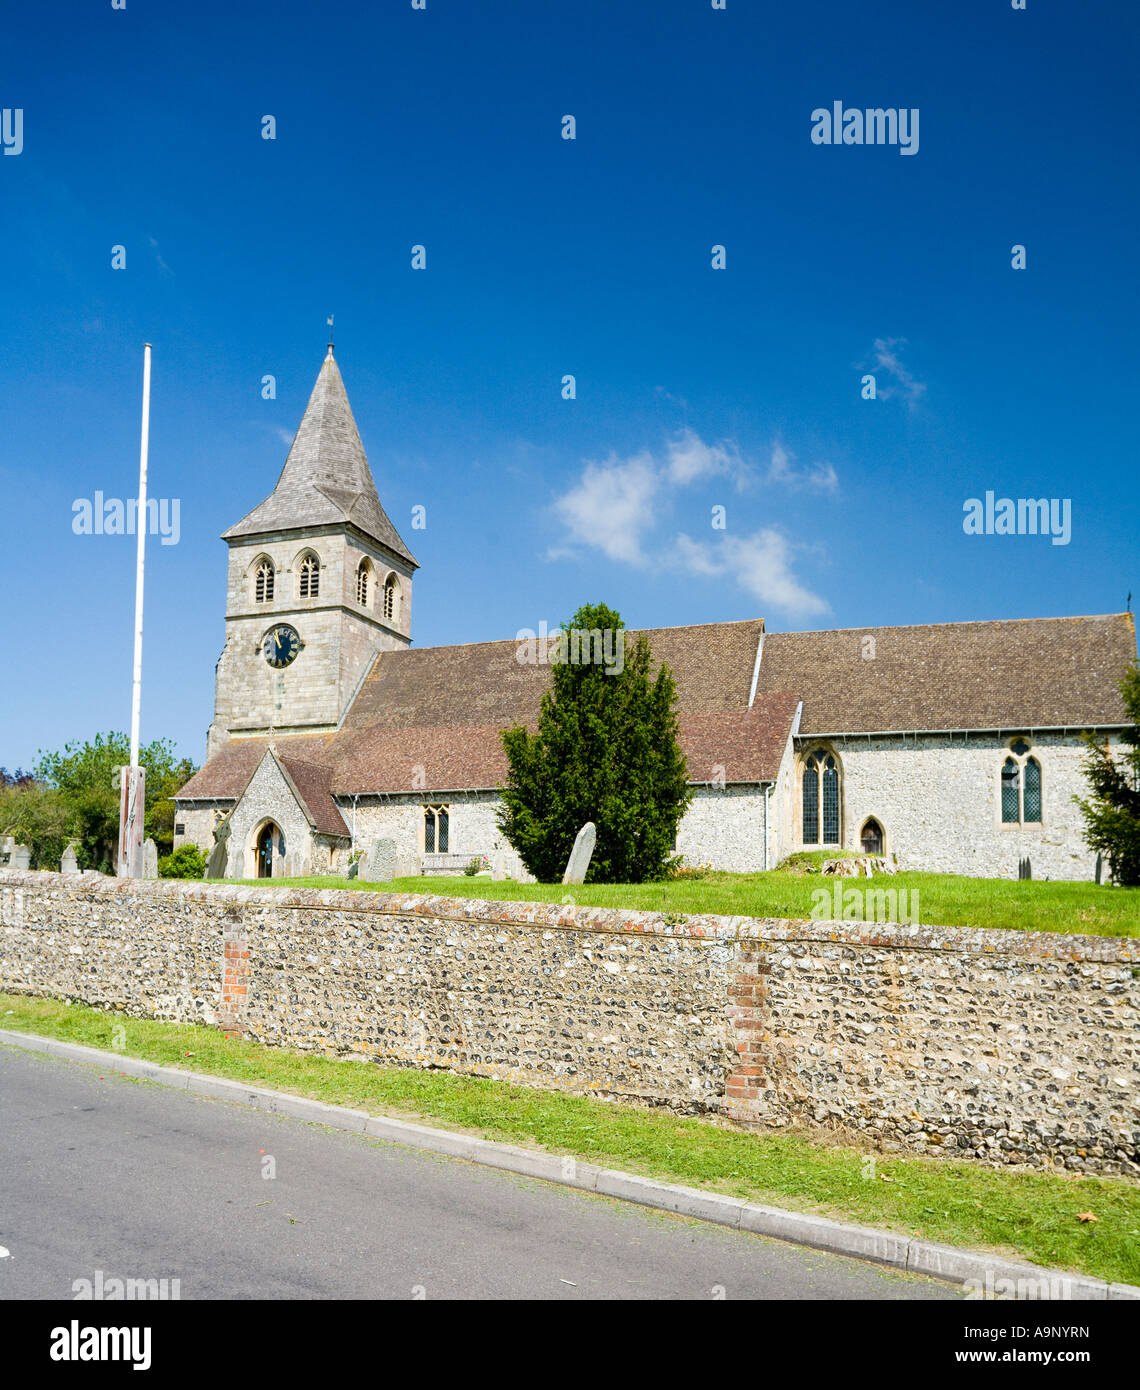 St Mary s church in Overton Hampshire UK Stock Photo